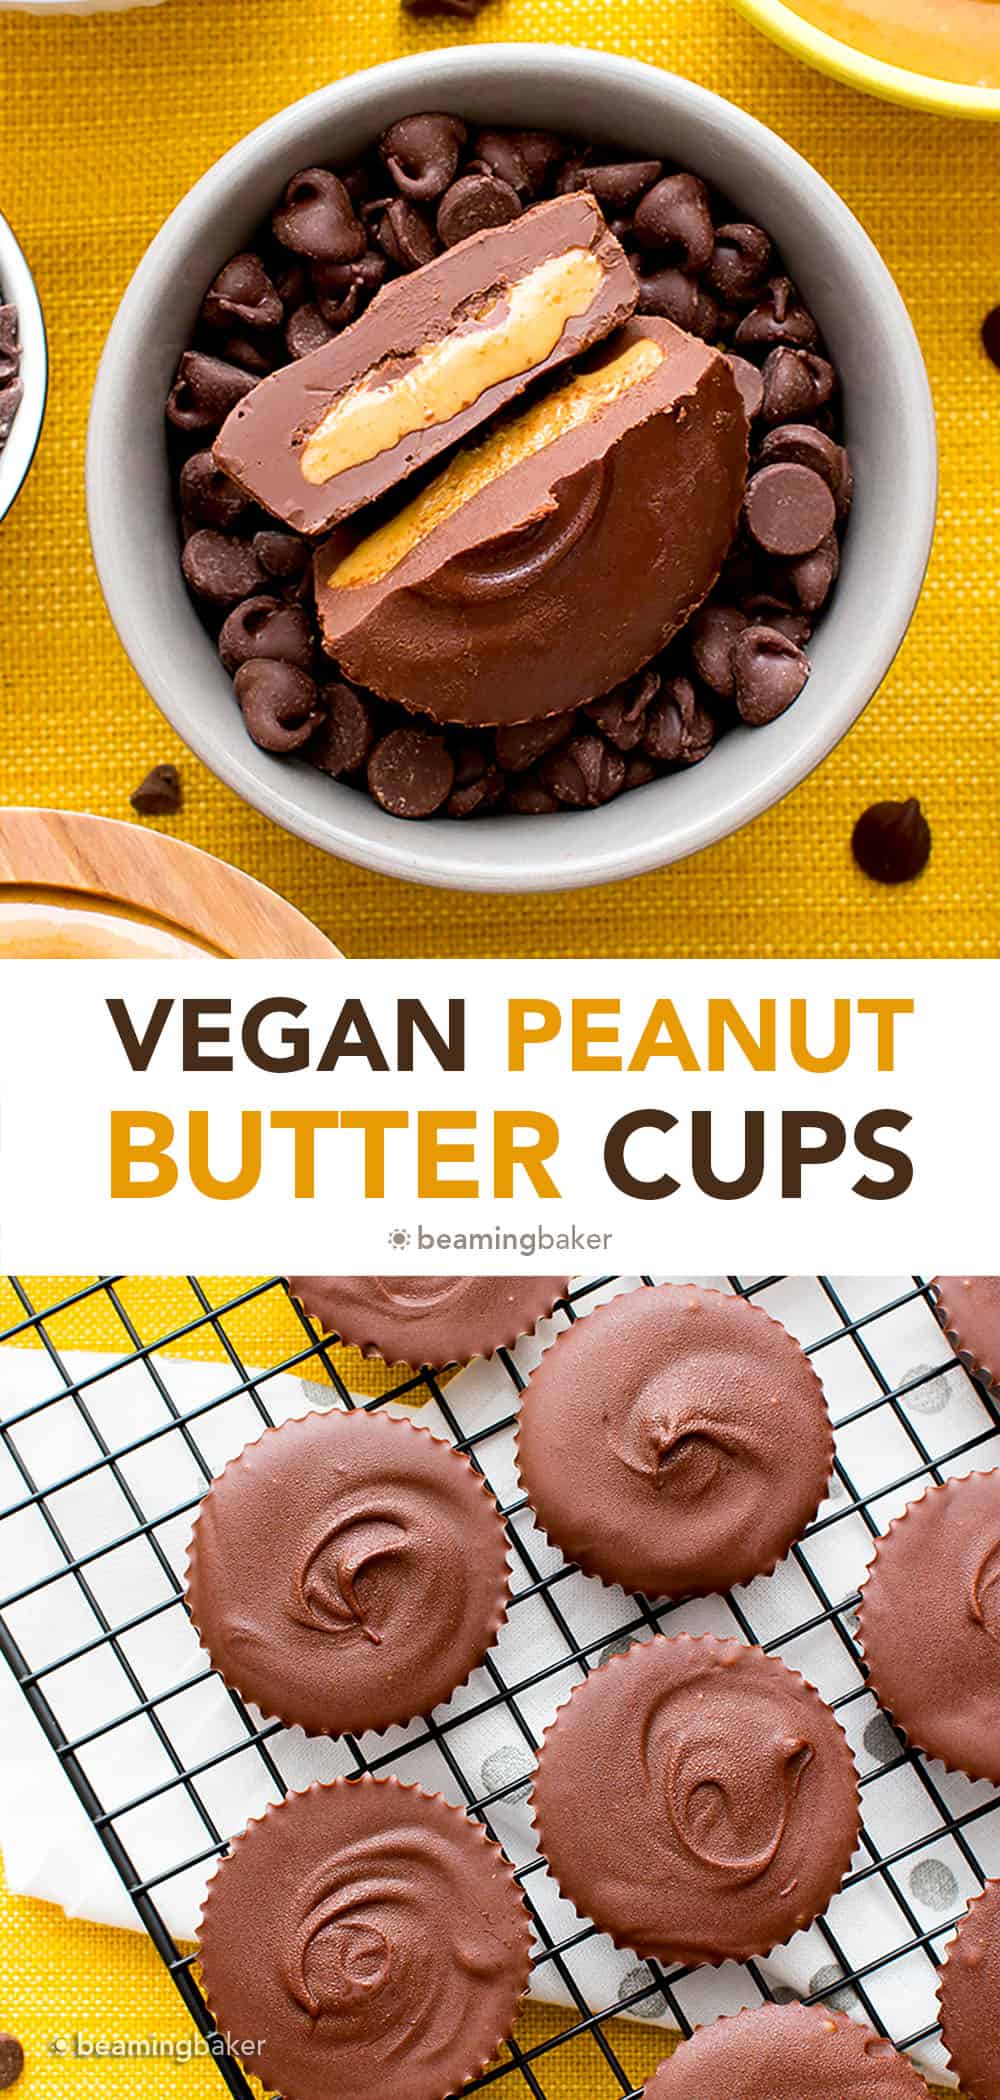 Vegan Peanut Butter Cups: just 5 ingredients for delicious vegan chocolate peanut butter cups! Easy to make, whole ingredients. #Vegan #PeanutButterCups #PeanutButter #VeganCandy | Recipe at BeamingBaker.com 